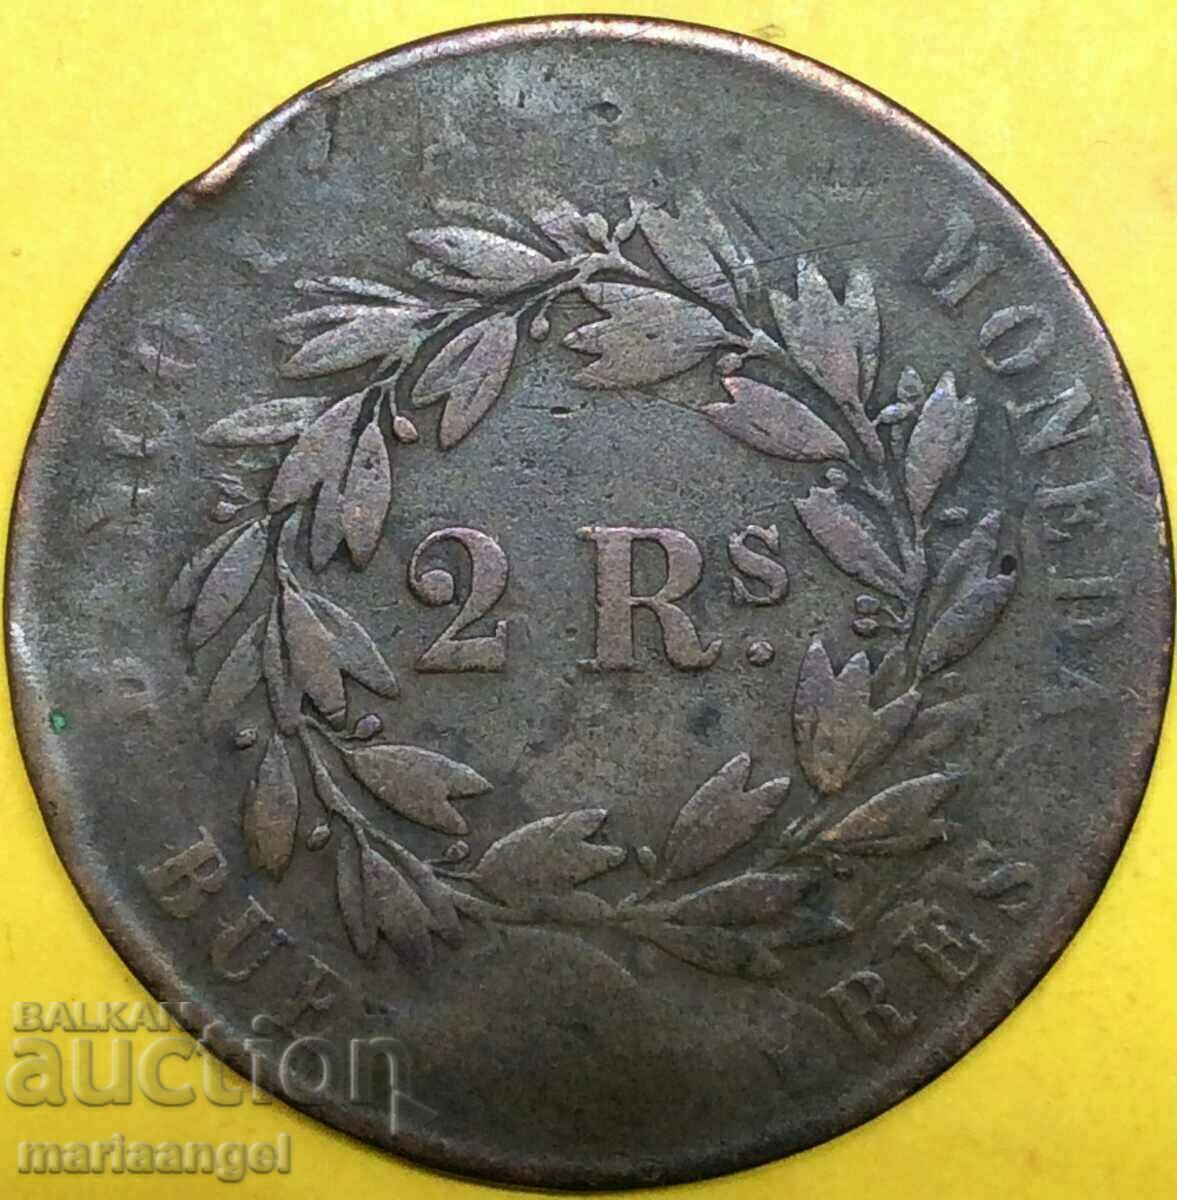 Argentina 2 Reales 1861 32mm copper - rare